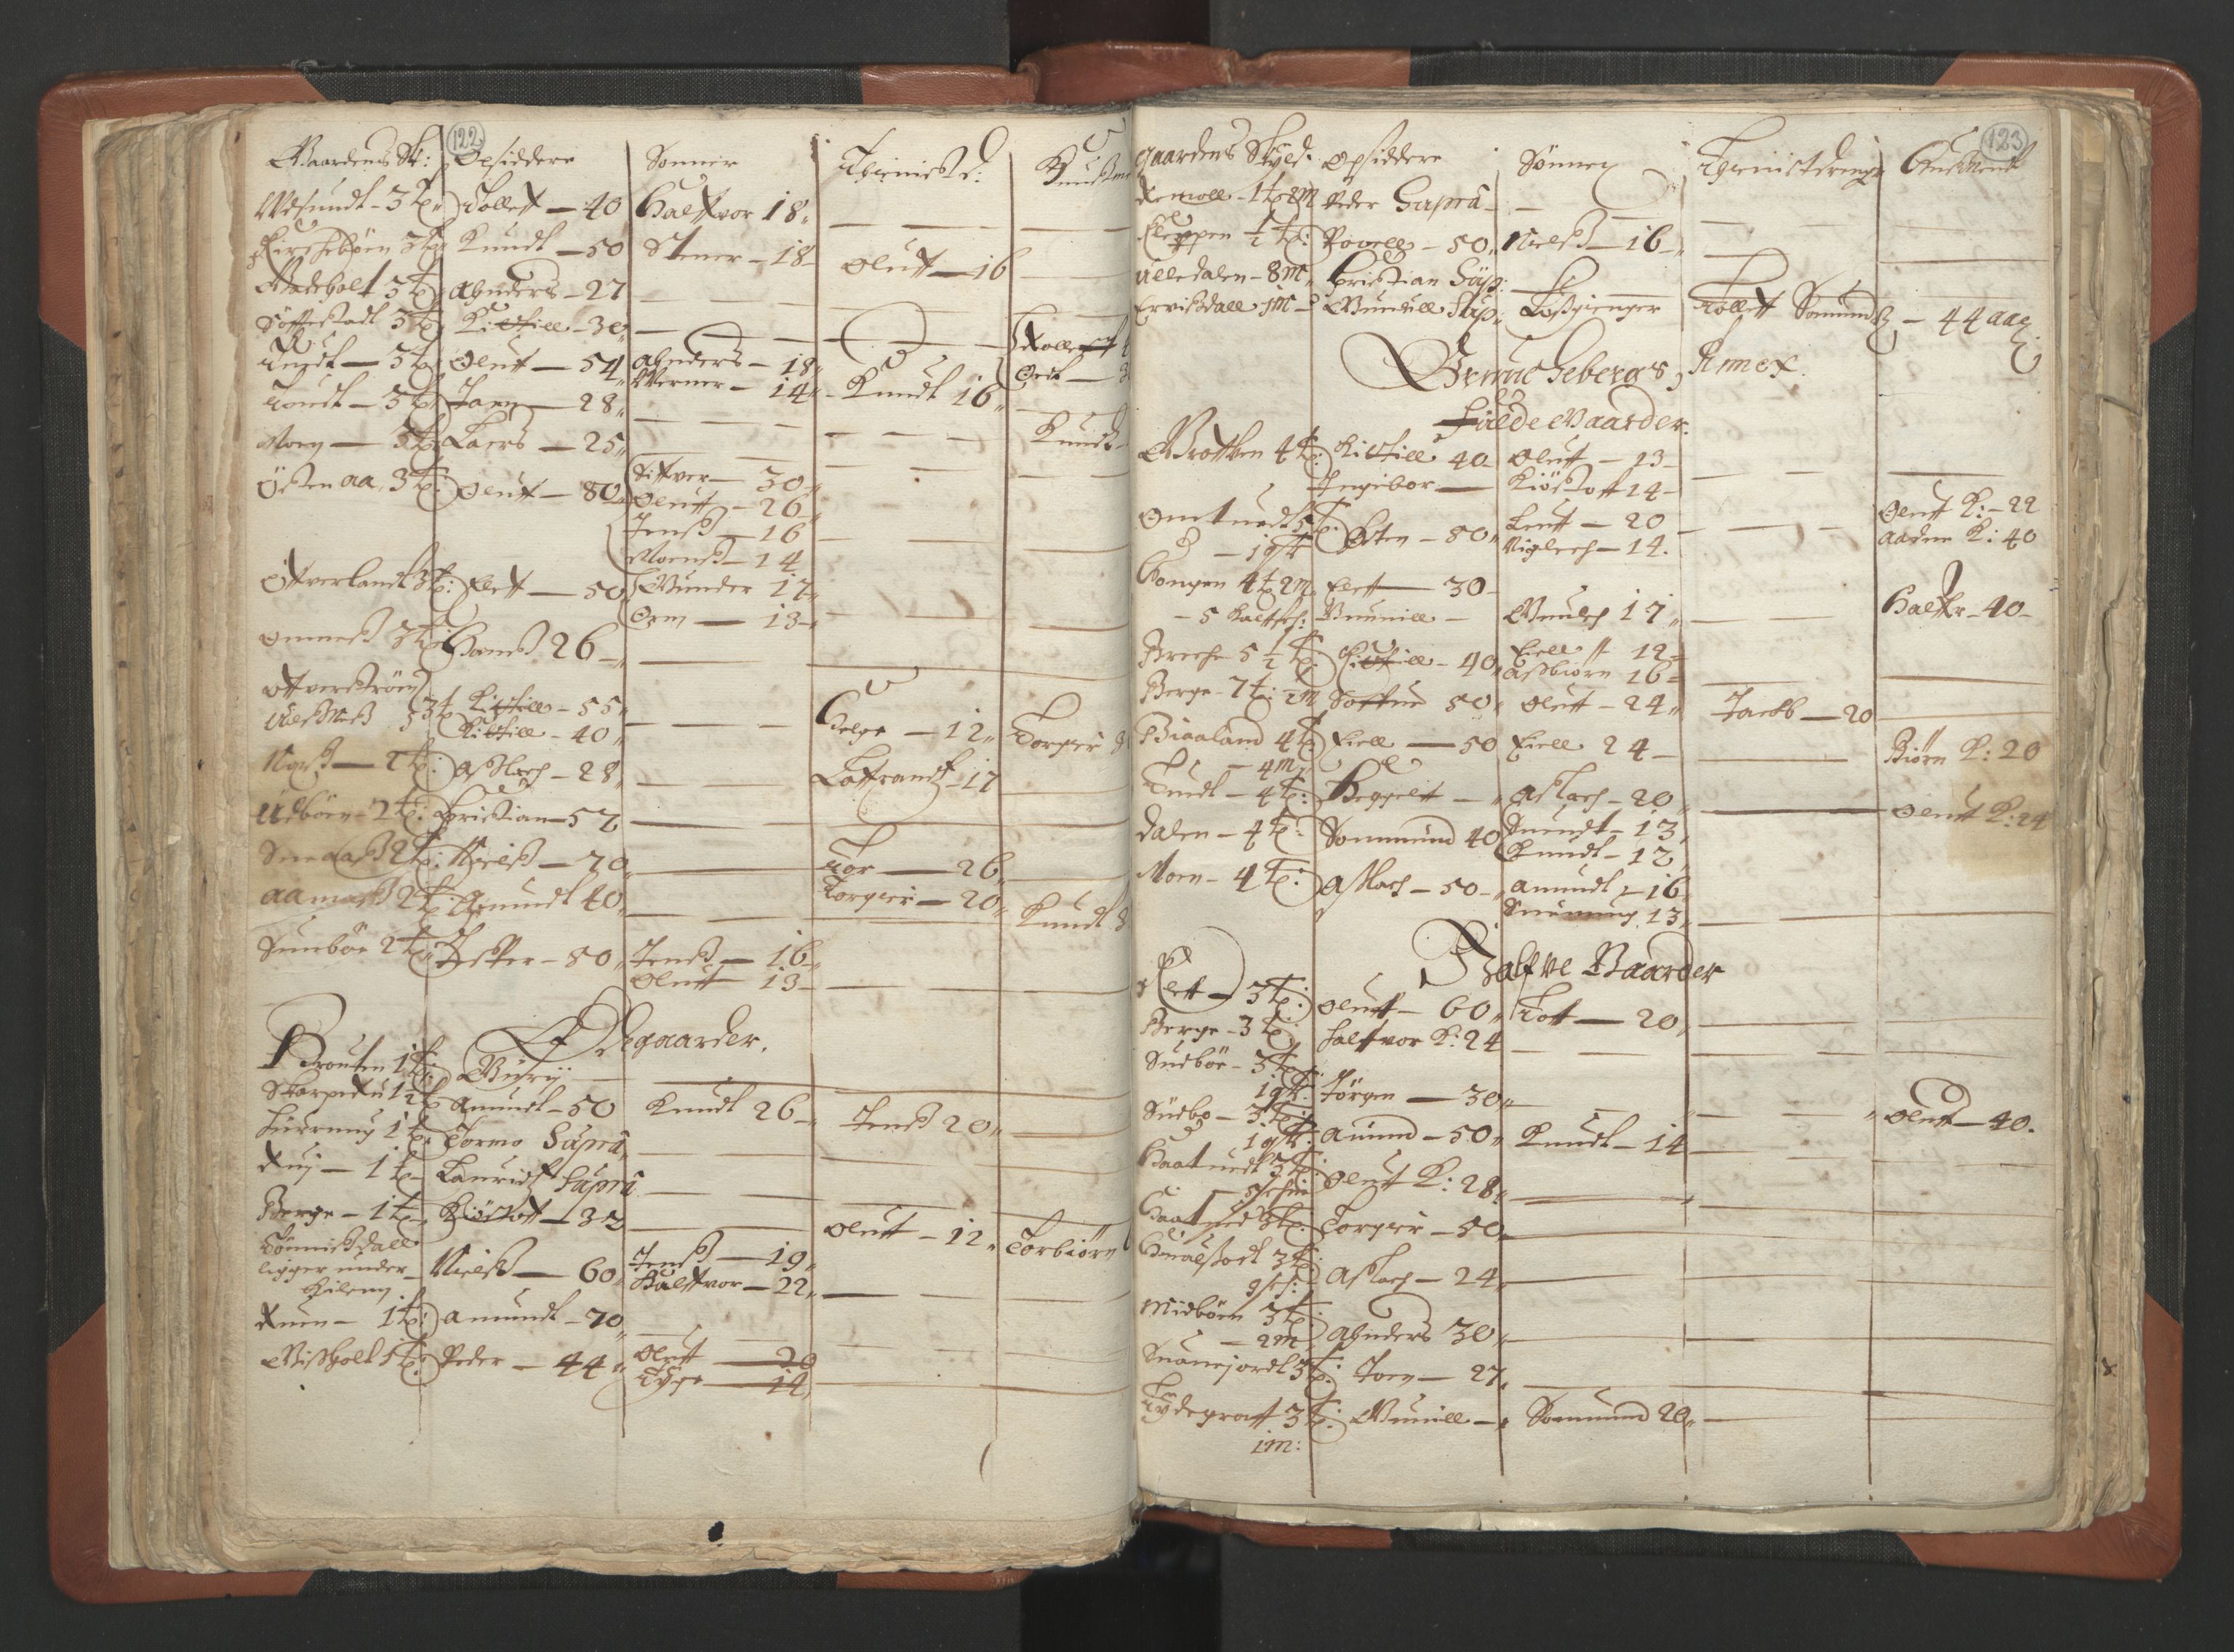 RA, Vicar's Census 1664-1666, no. 12: Øvre Telemark deanery, Nedre Telemark deanery and Bamble deanery, 1664-1666, p. 122-123